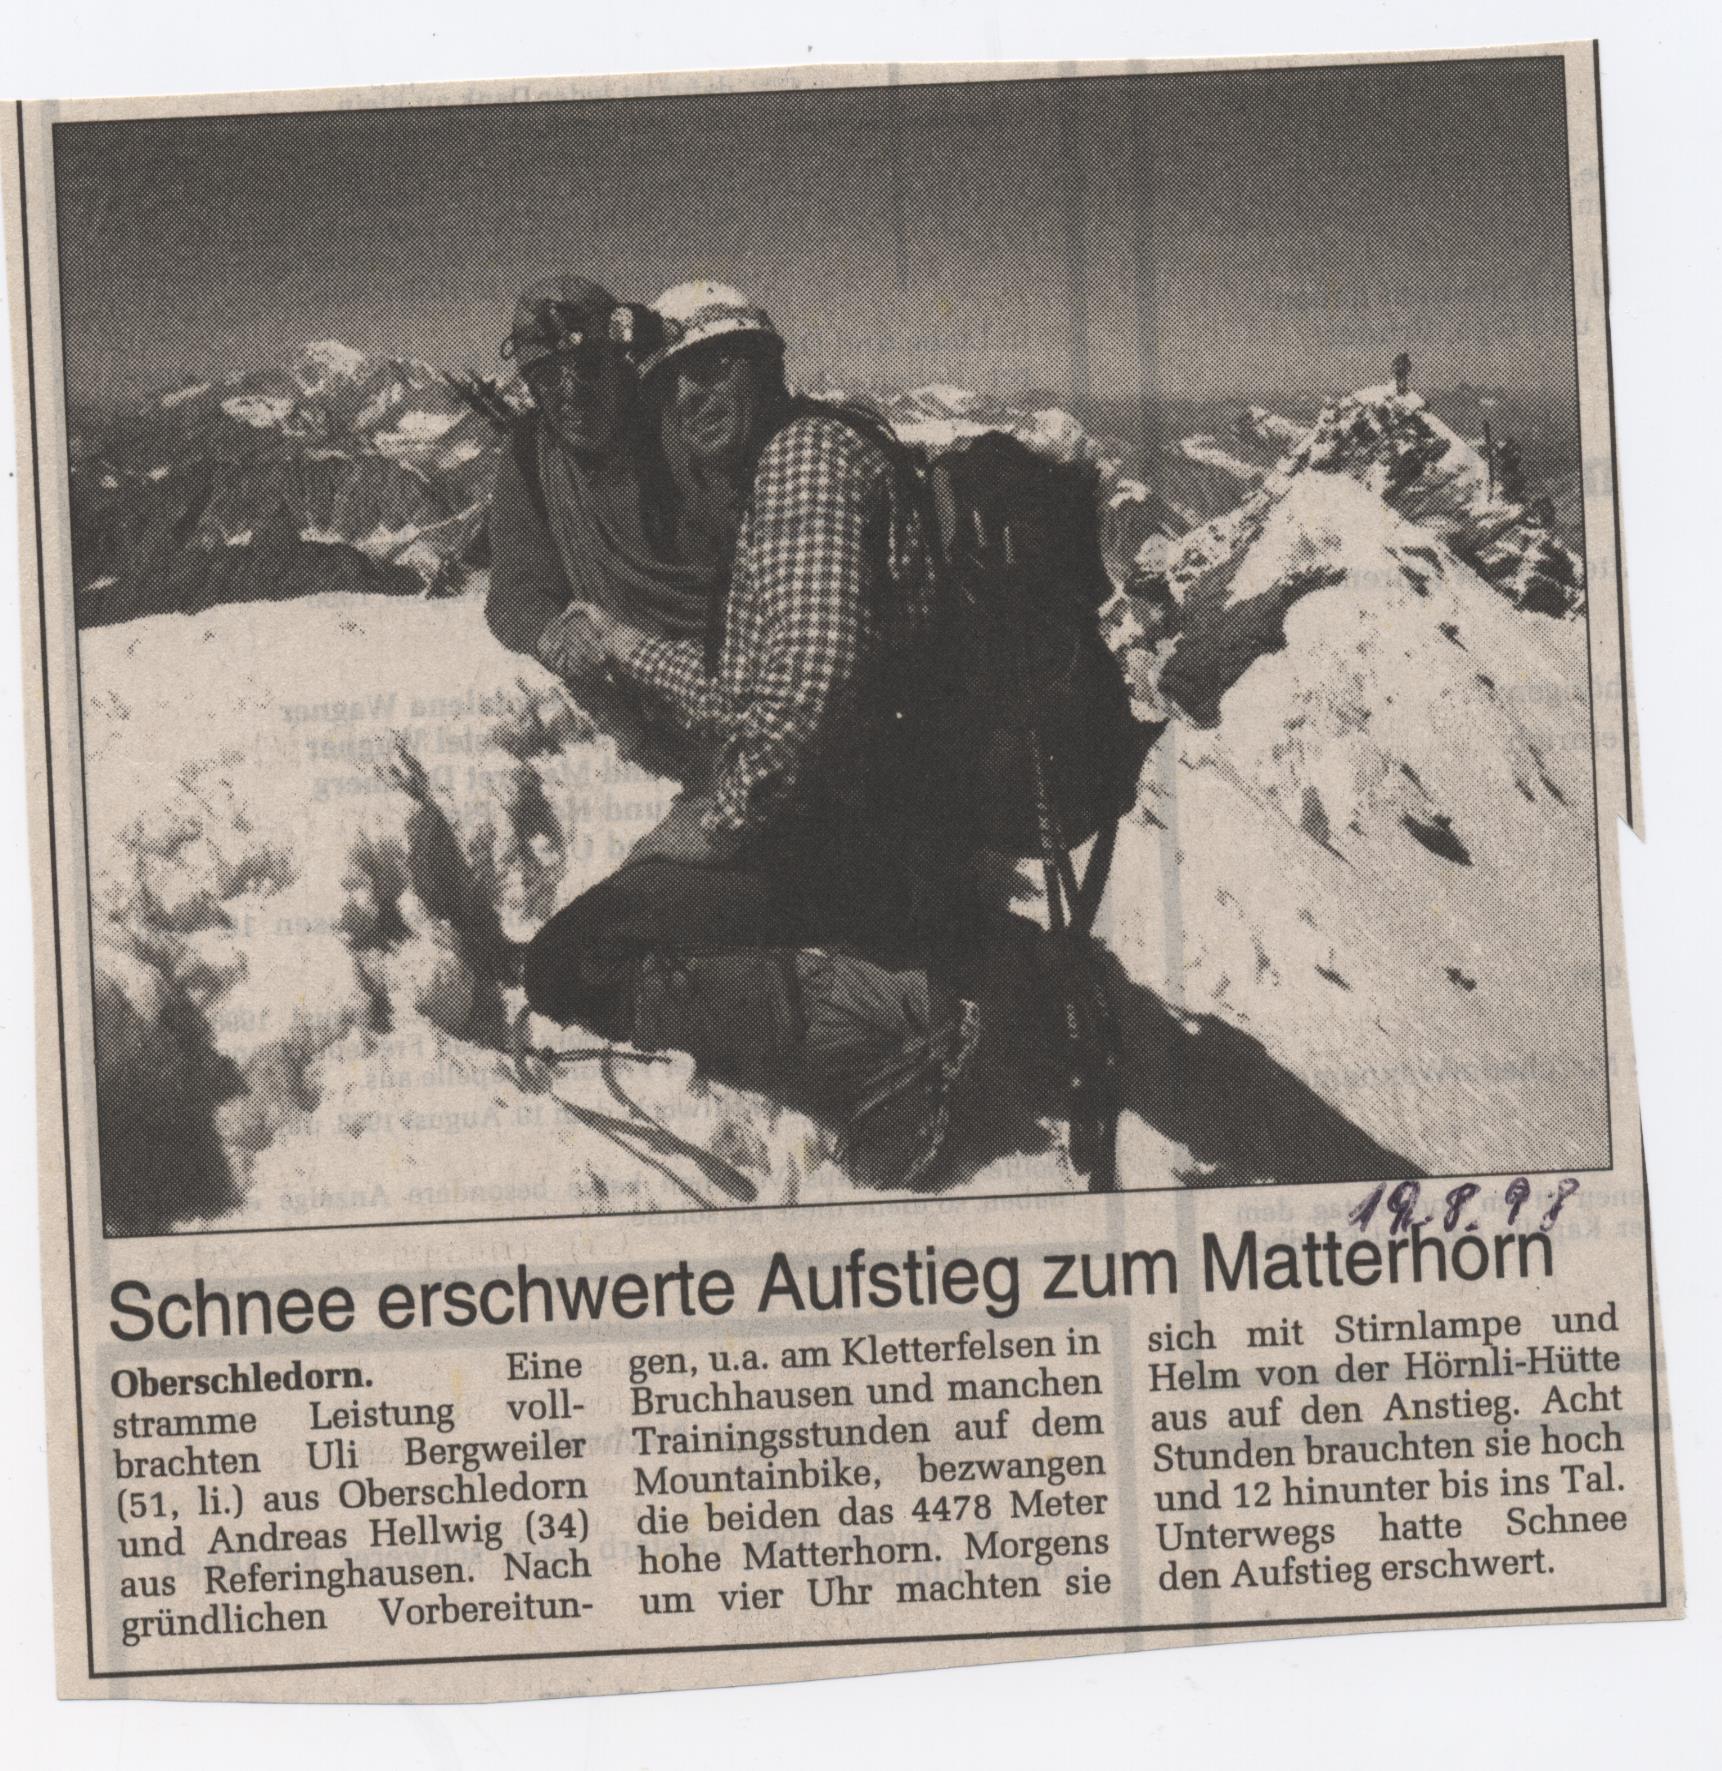 Schenn erschwerte Aufstieg zum Matterhorn